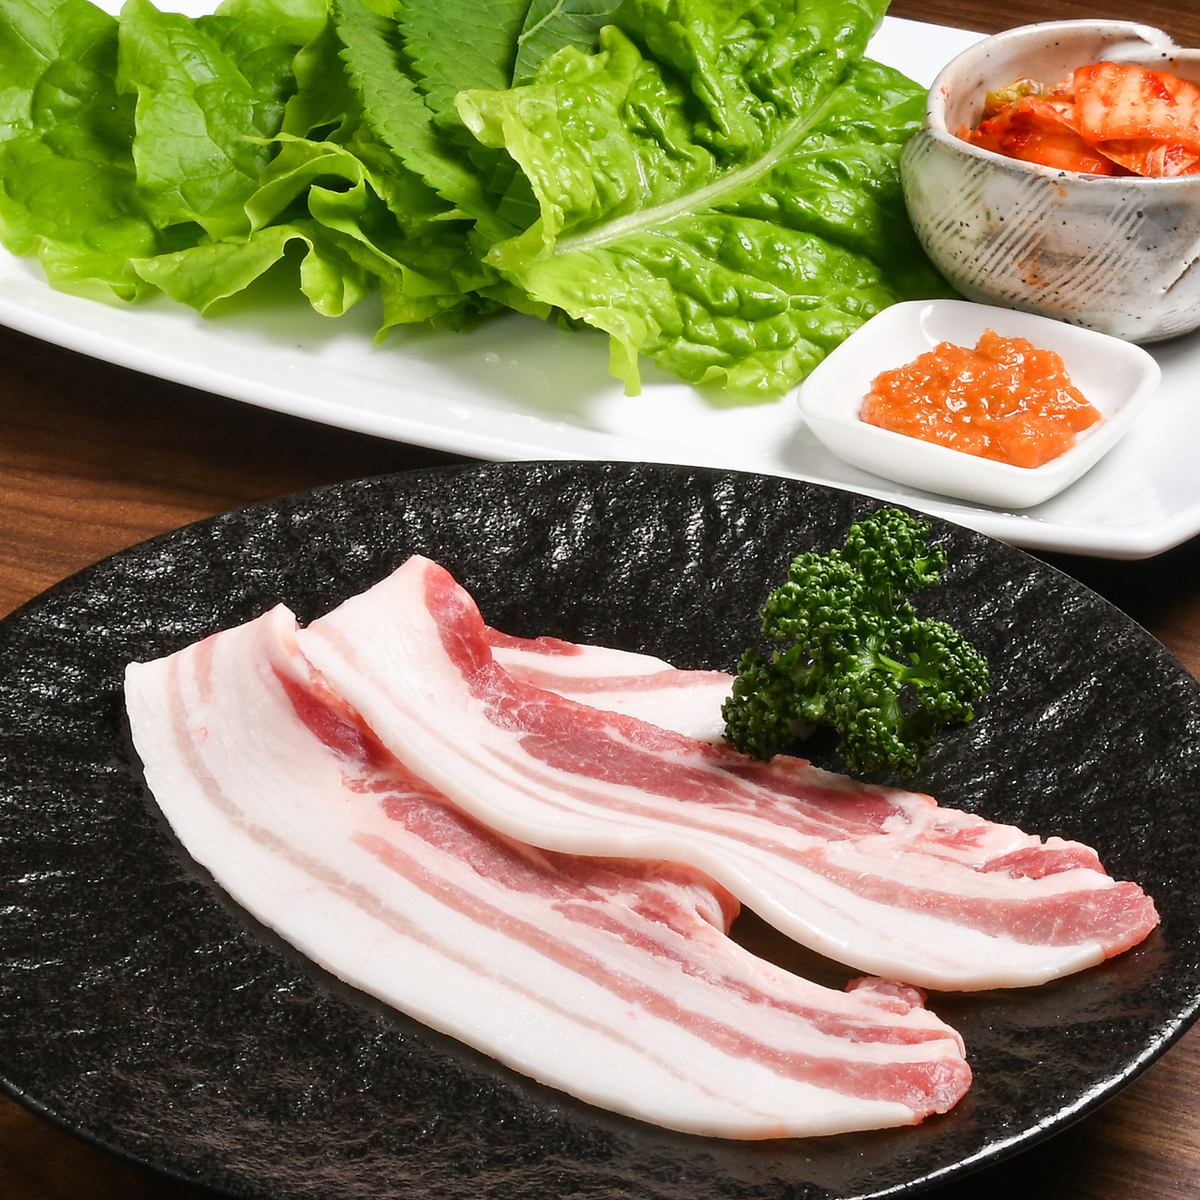 You can enjoy yakiniku, kimchi, and samgyeopsal♪